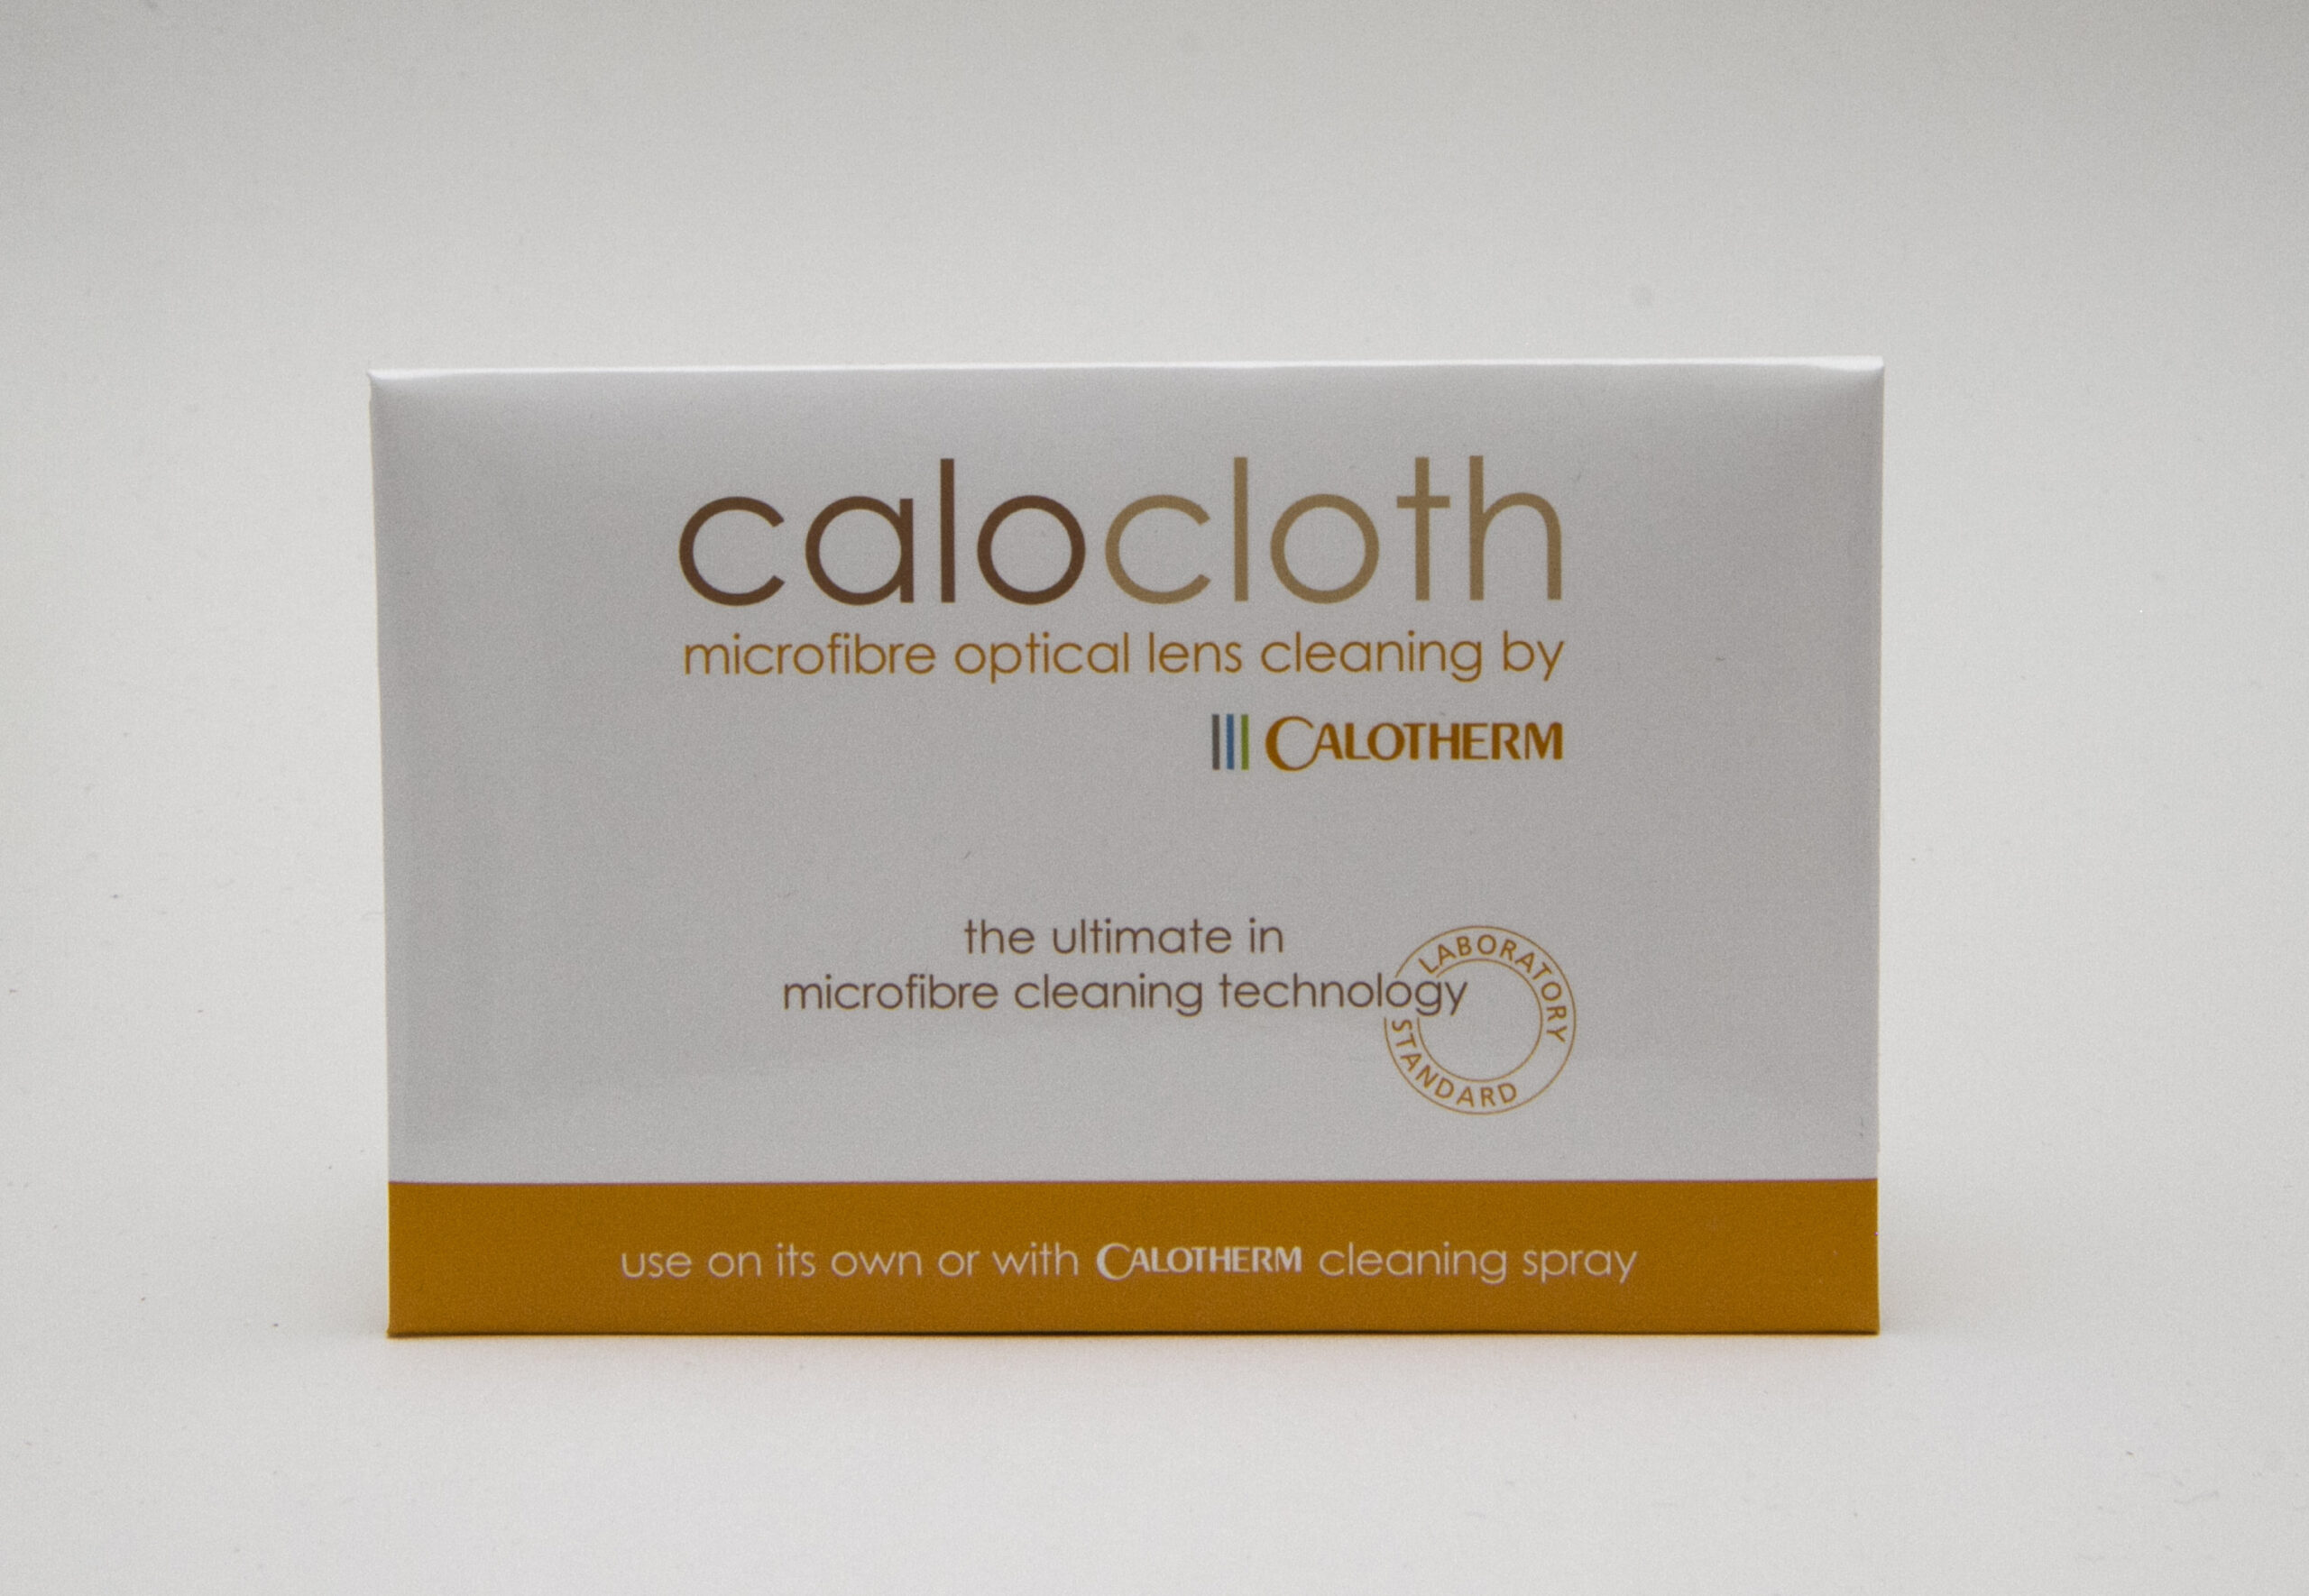 Calotherm Calocloth